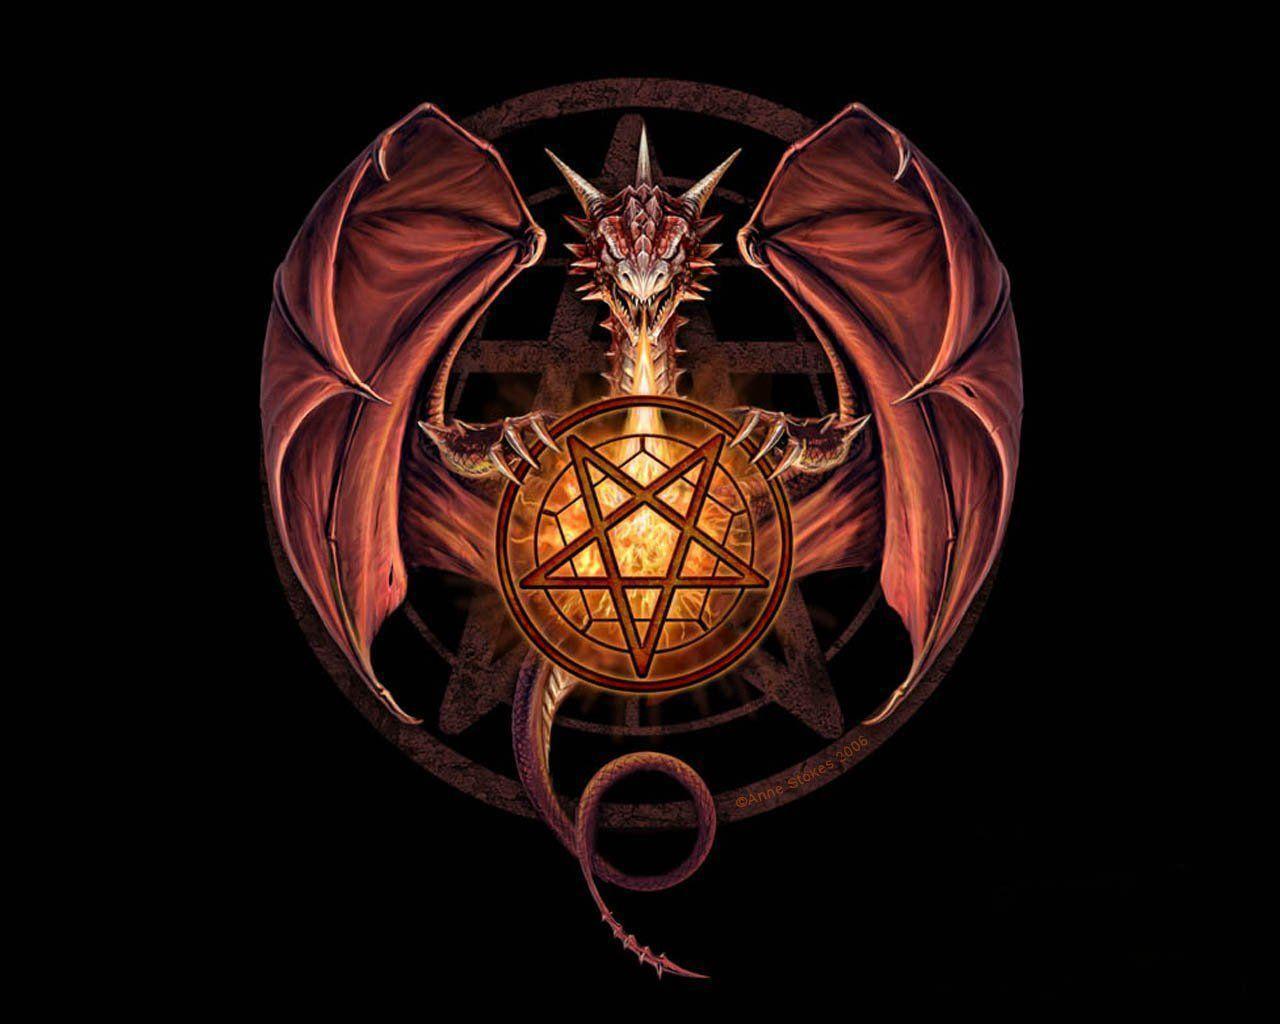 Hd Wallpapers Satanic Pentagram 450 X 281 35 Kb Jpeg